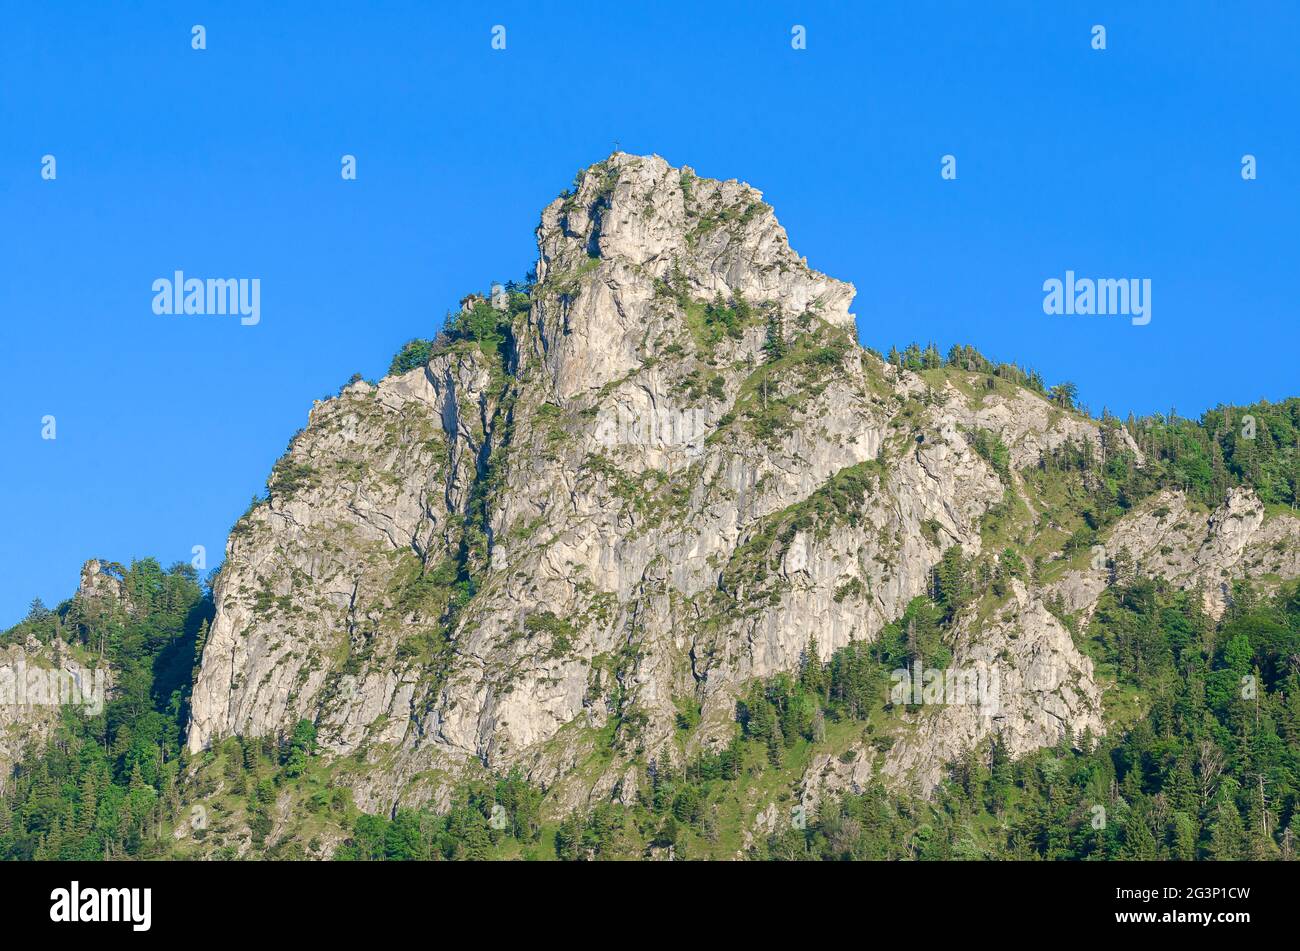 Jagged rock formation Nockstein in Salzburg, Austria, Europe. Belongs to Gaisberg, Hausberg of Salzburg, the foothills of Northern Limestone Alps. Stock Photo